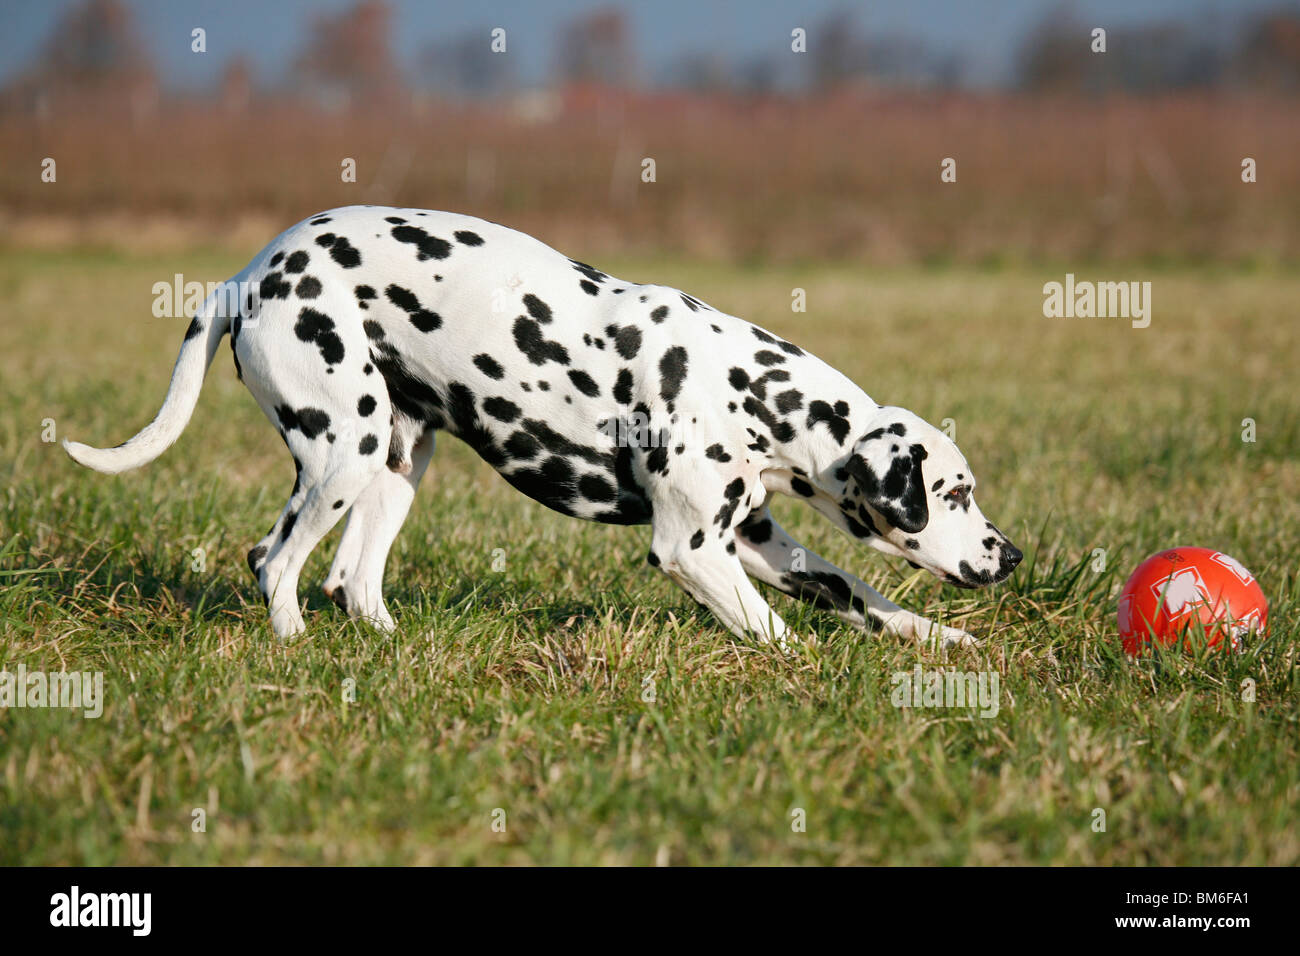 spielender Dalmatiner / playing Dalmatian Stock Photo